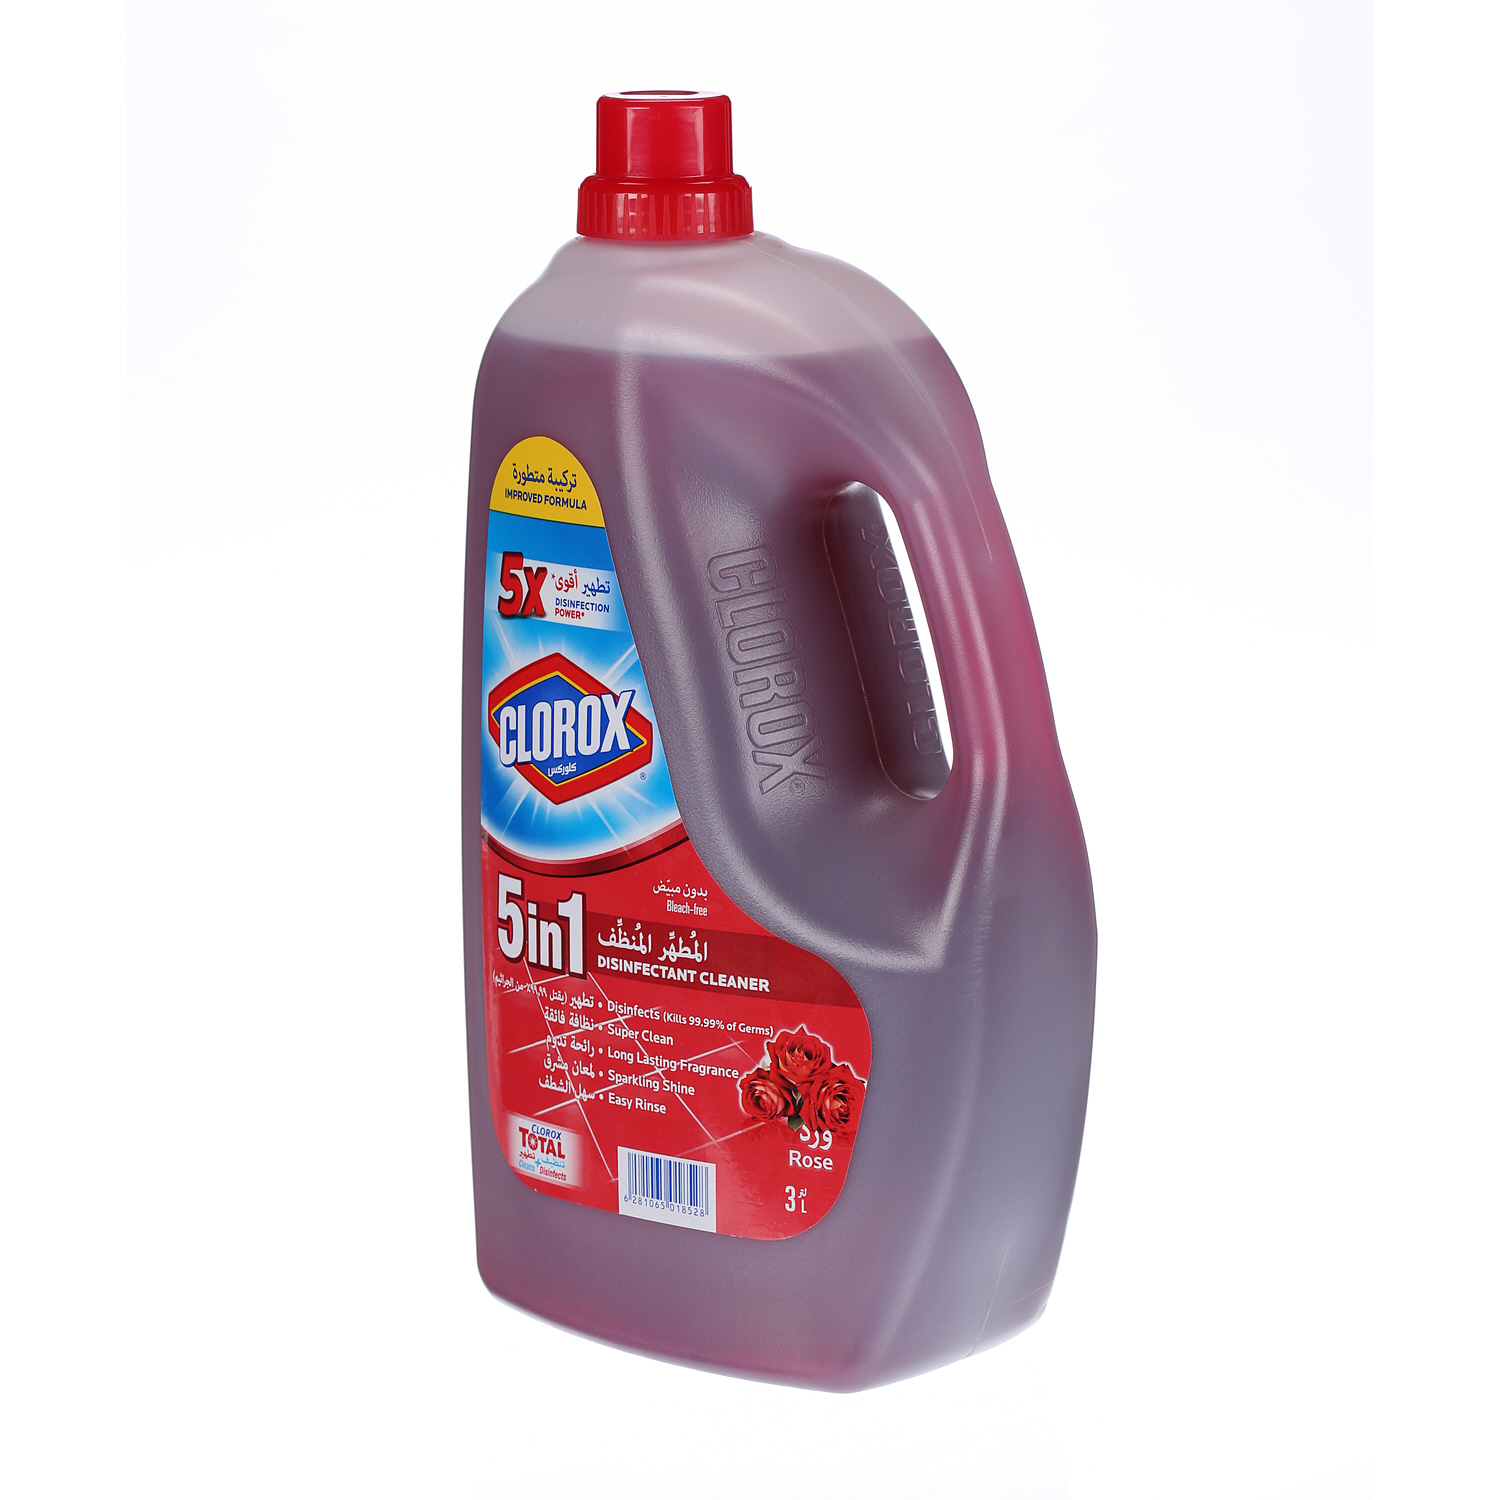 Clorox Disinfectant Cleaner non Bleach Rose 3Ltr